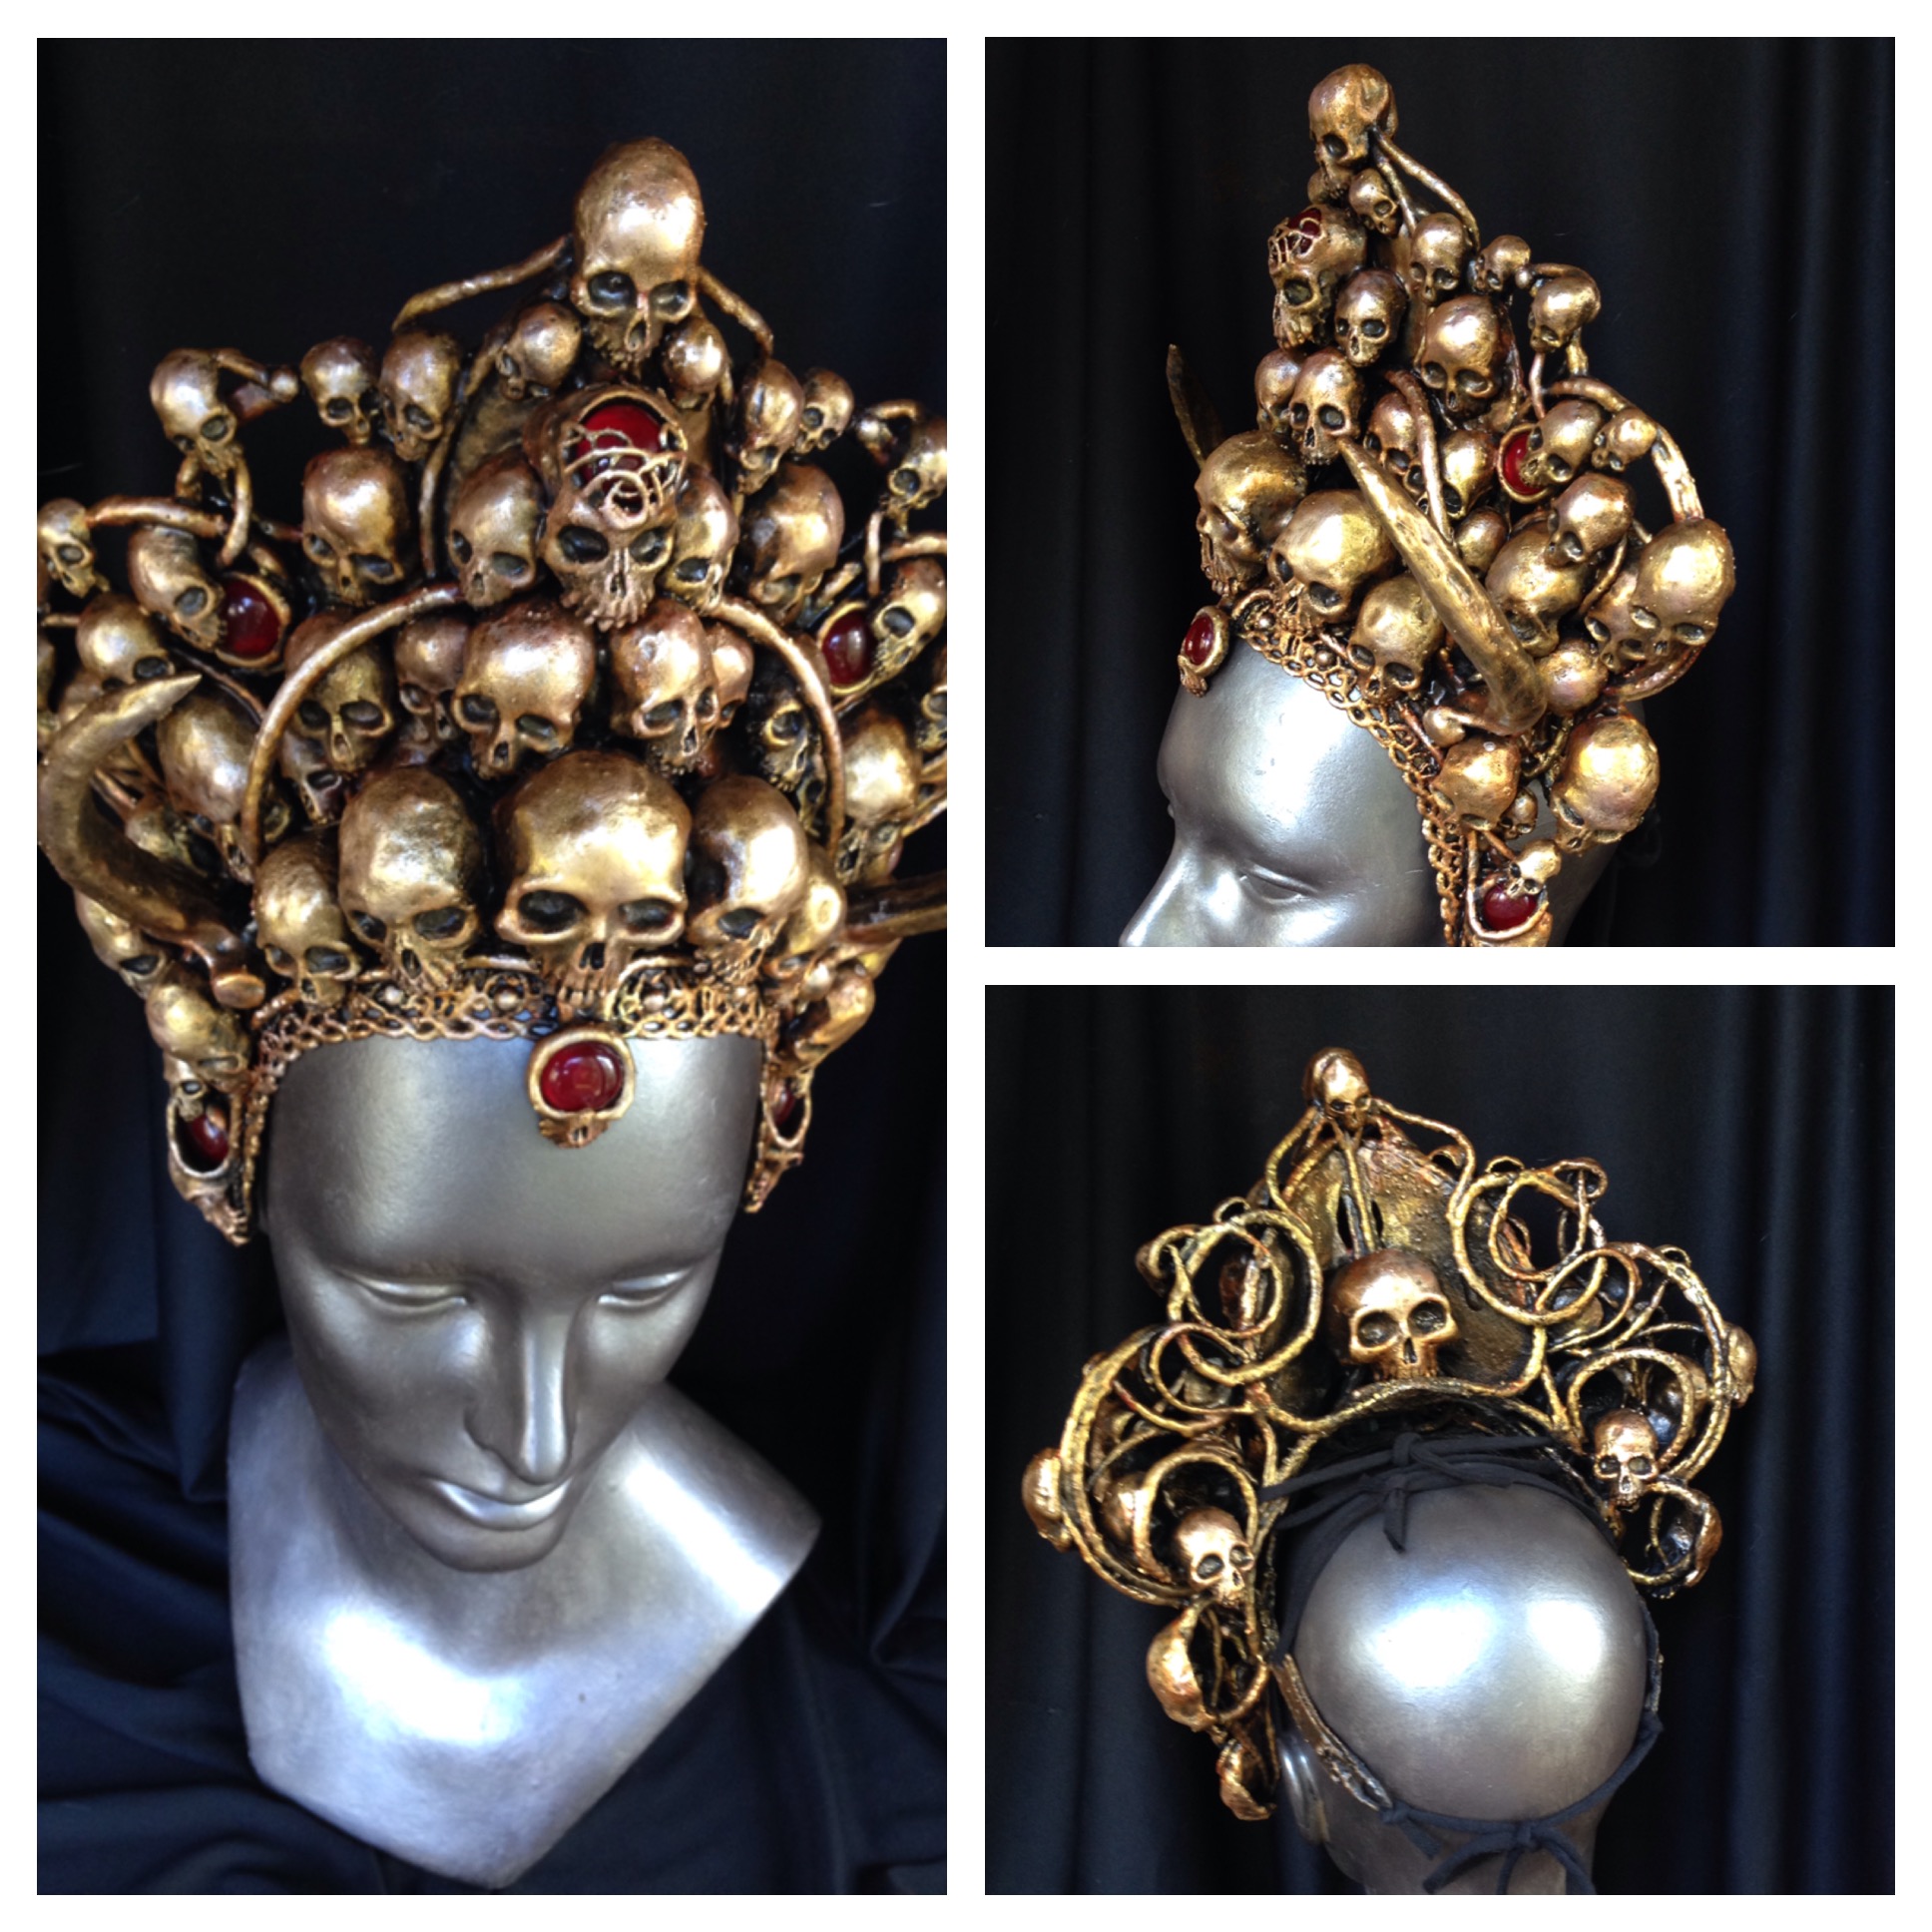 montage of golden skull crown